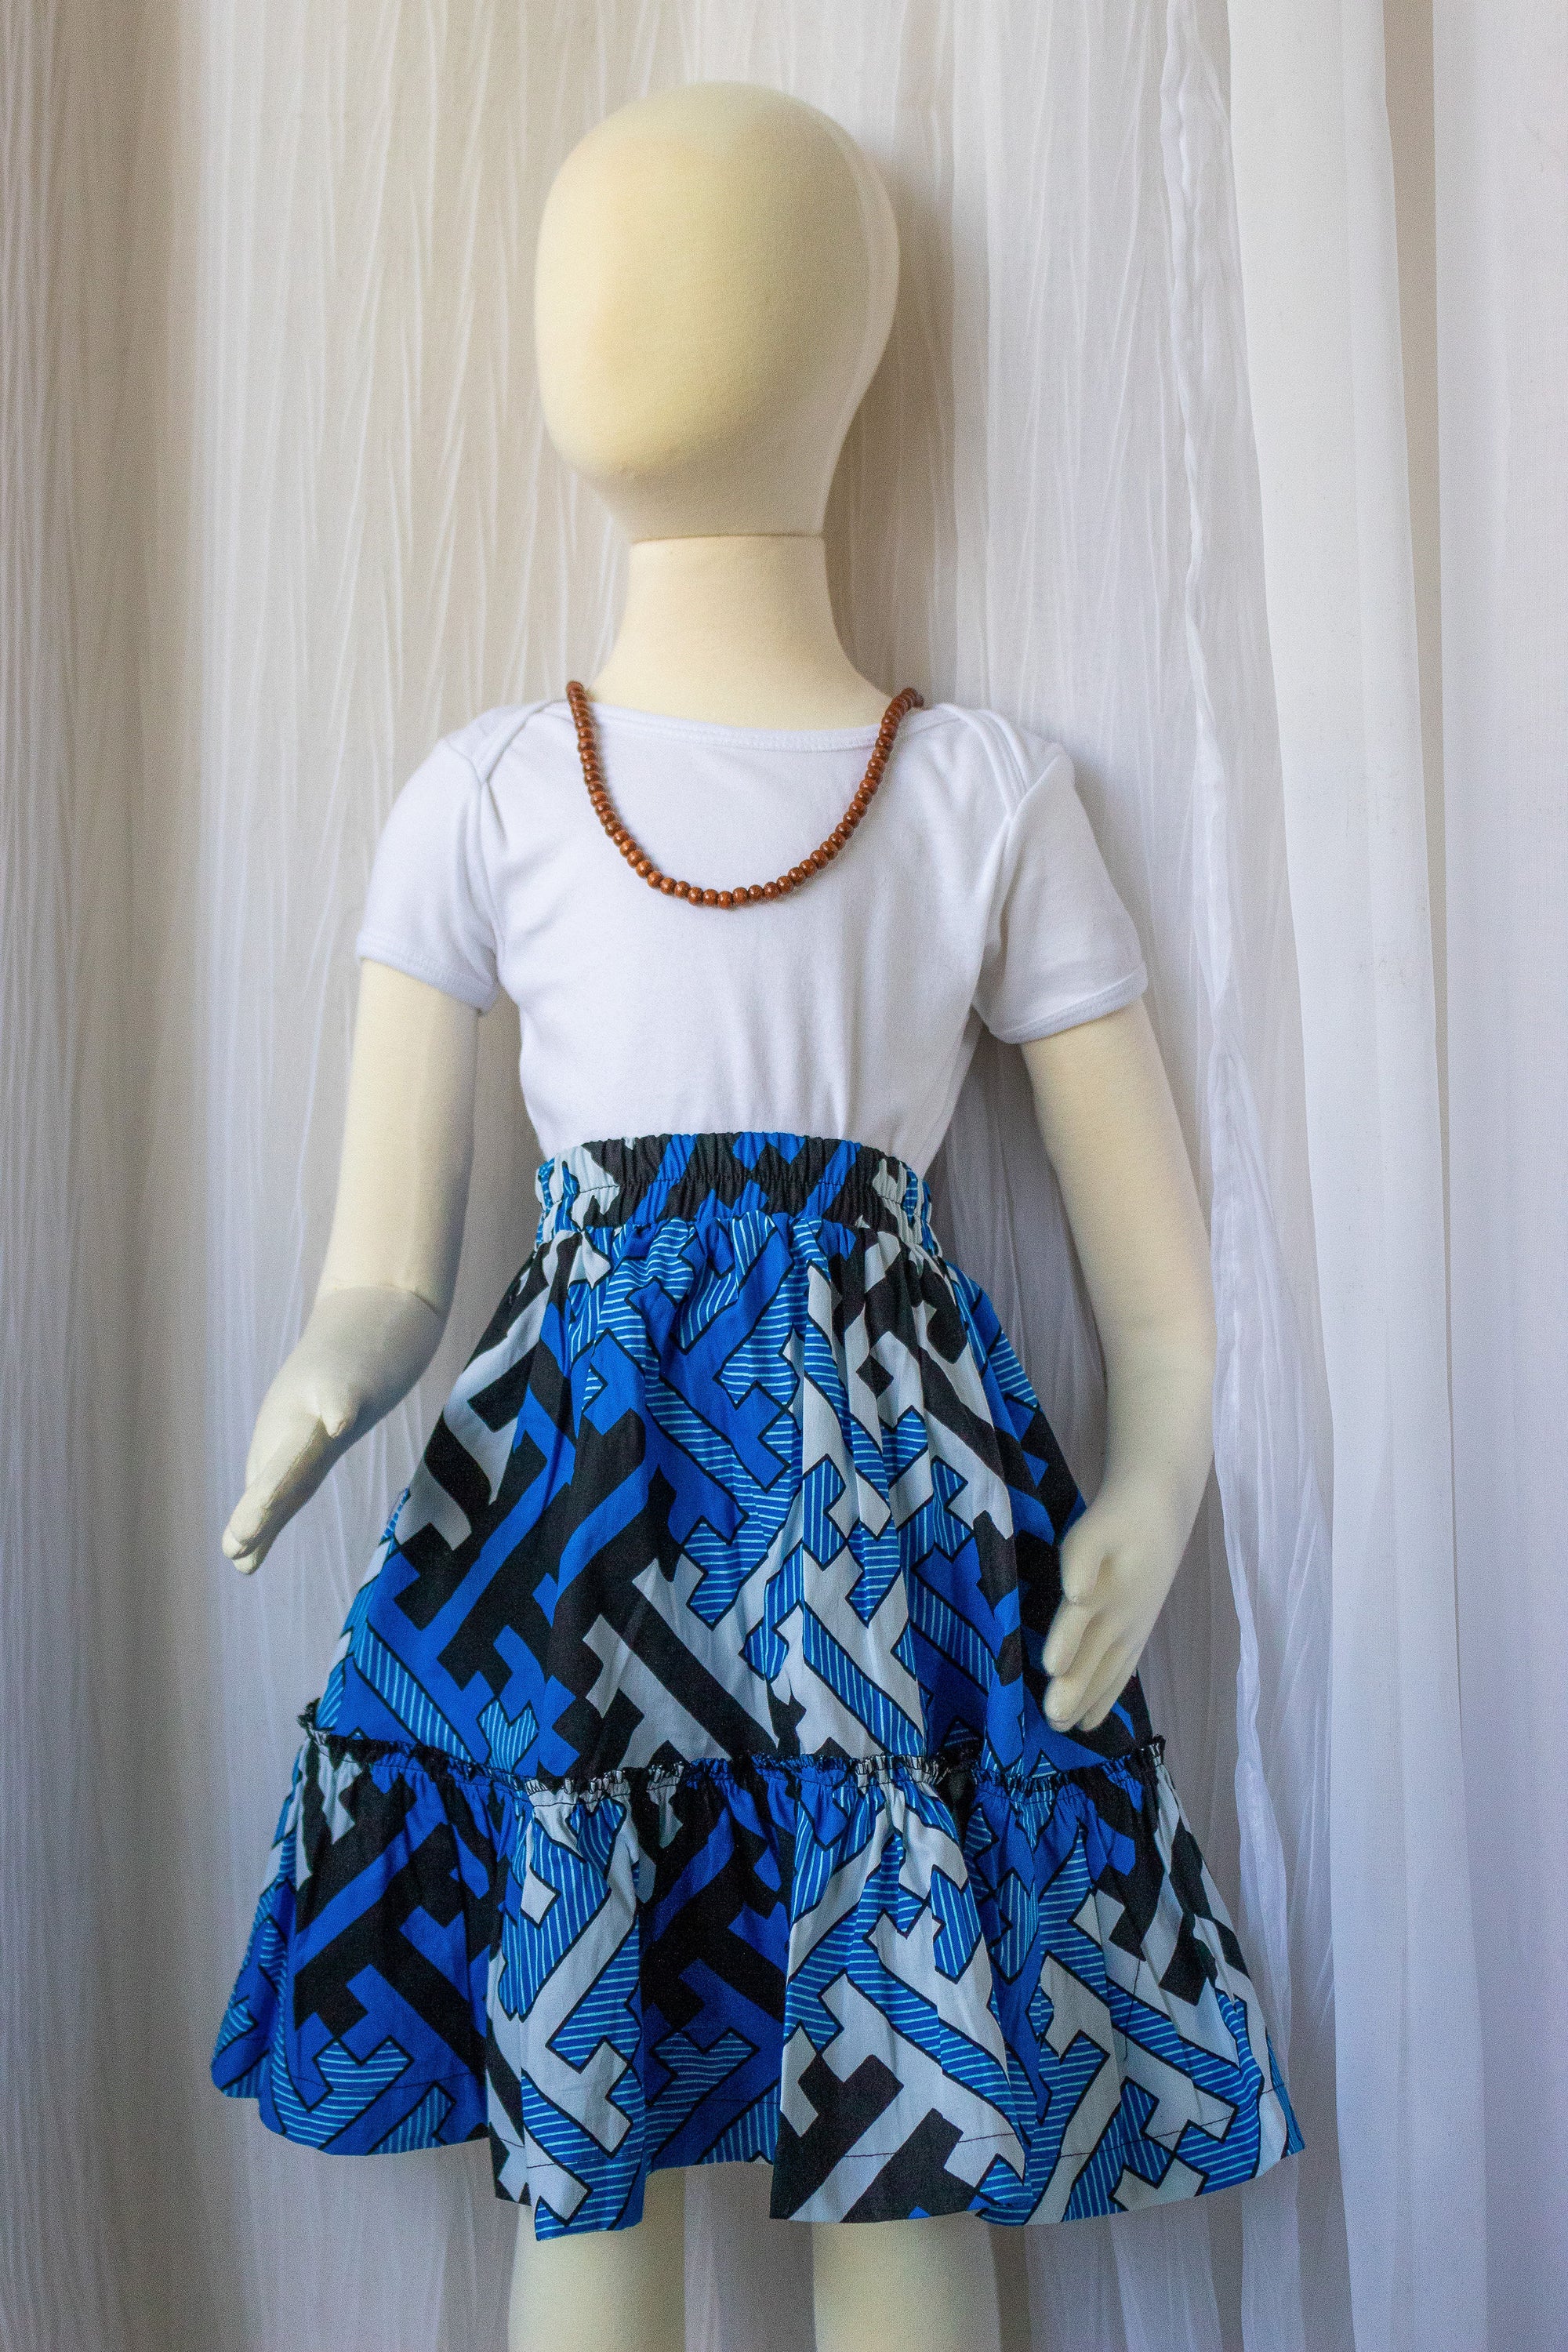 Tiered Skirt Ankara/Kitenge/African Print- Light Blue/Black Geometric Print